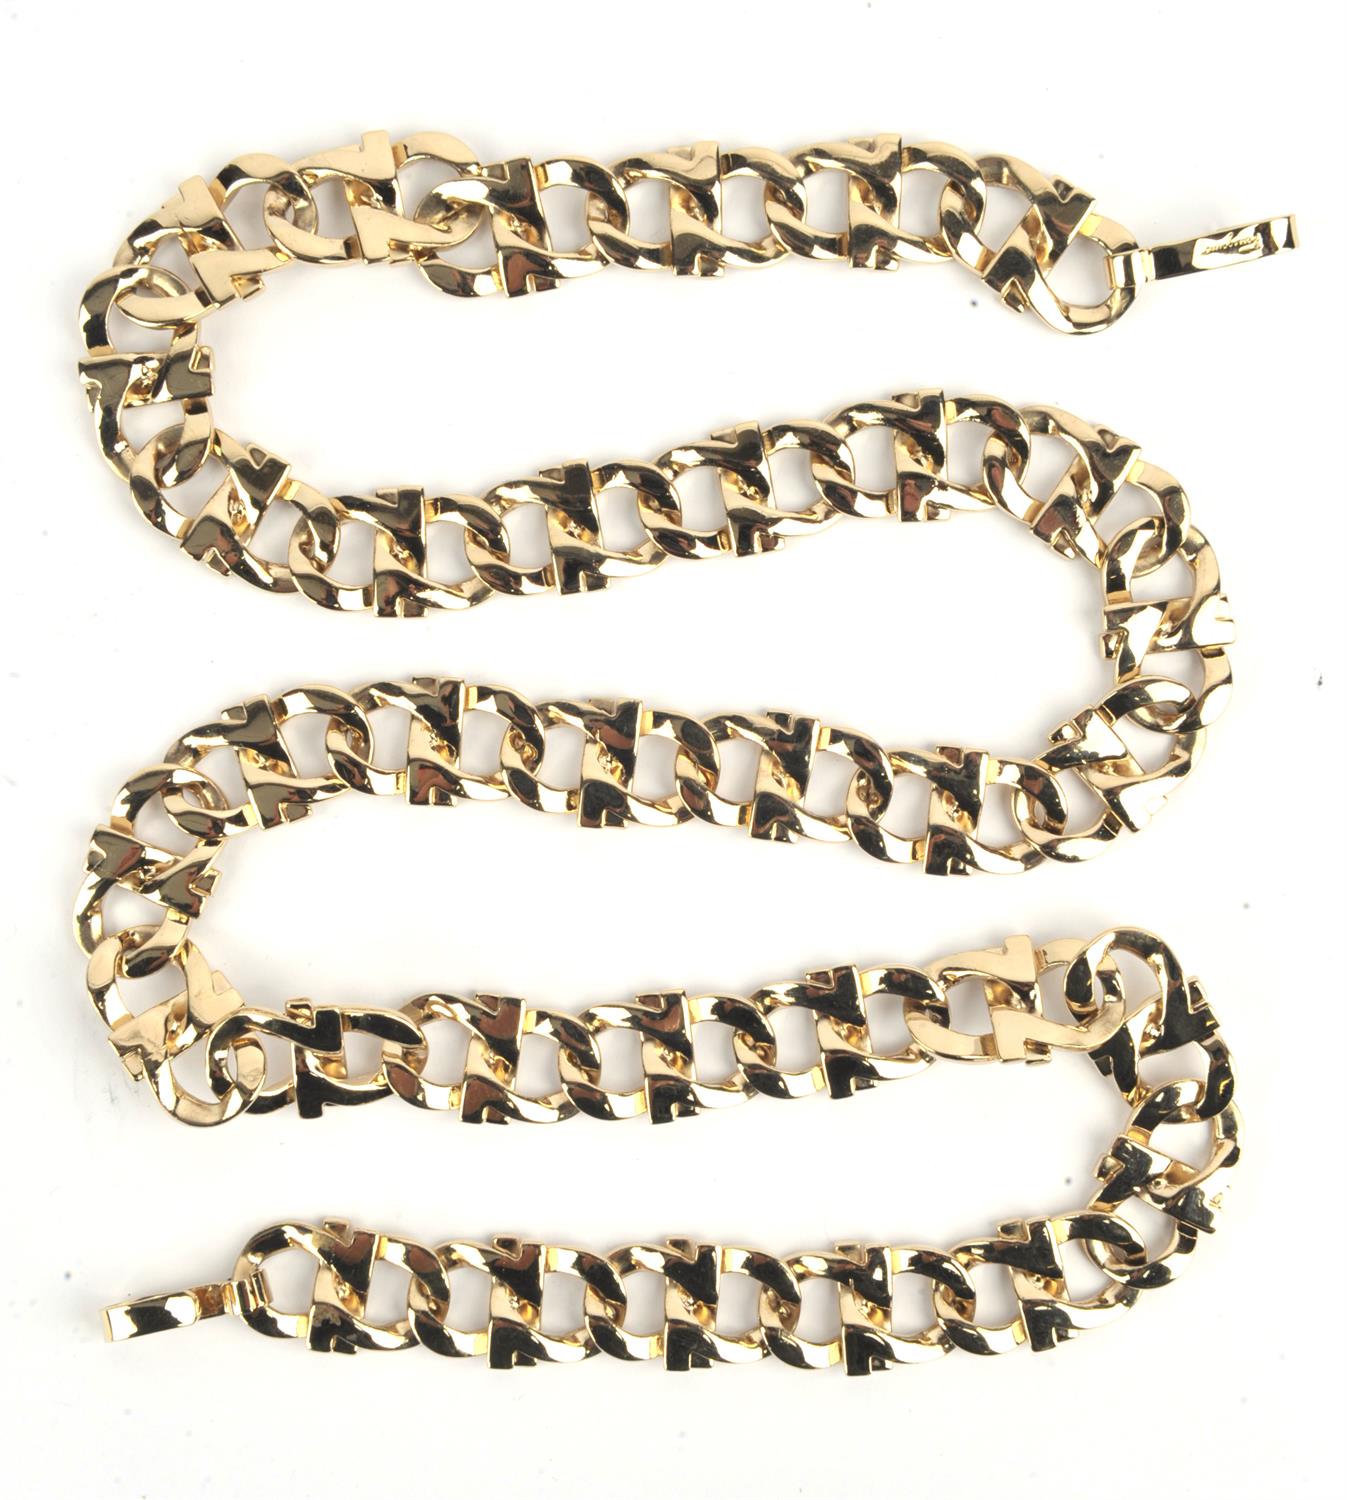 SALVATORE FERRAGAMO hook fastening gold-tone chain-link belt (2cm x 97cm) in original dust bag - Image 2 of 2